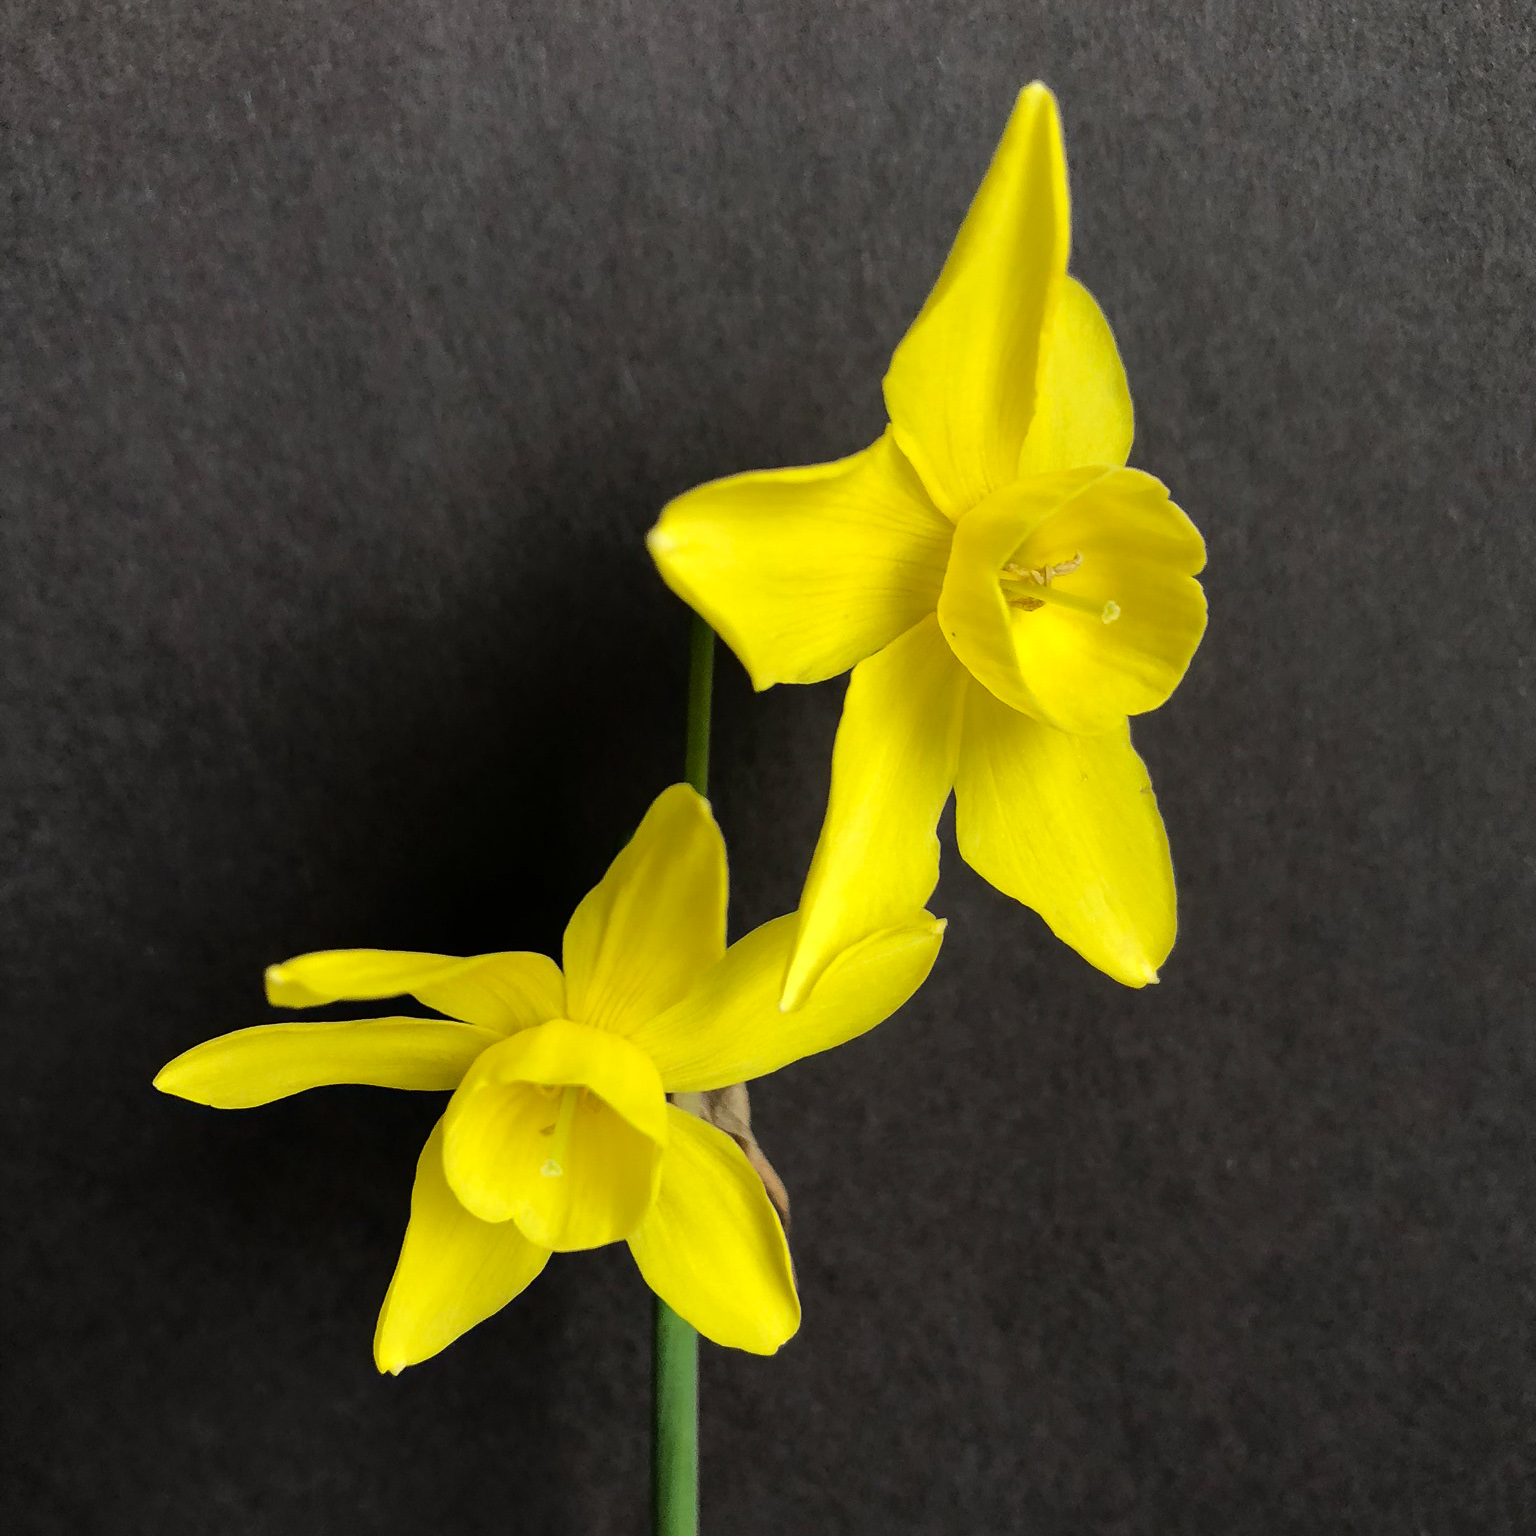 three quarter views of two narcissus sunlight sensation flowers on a single stem